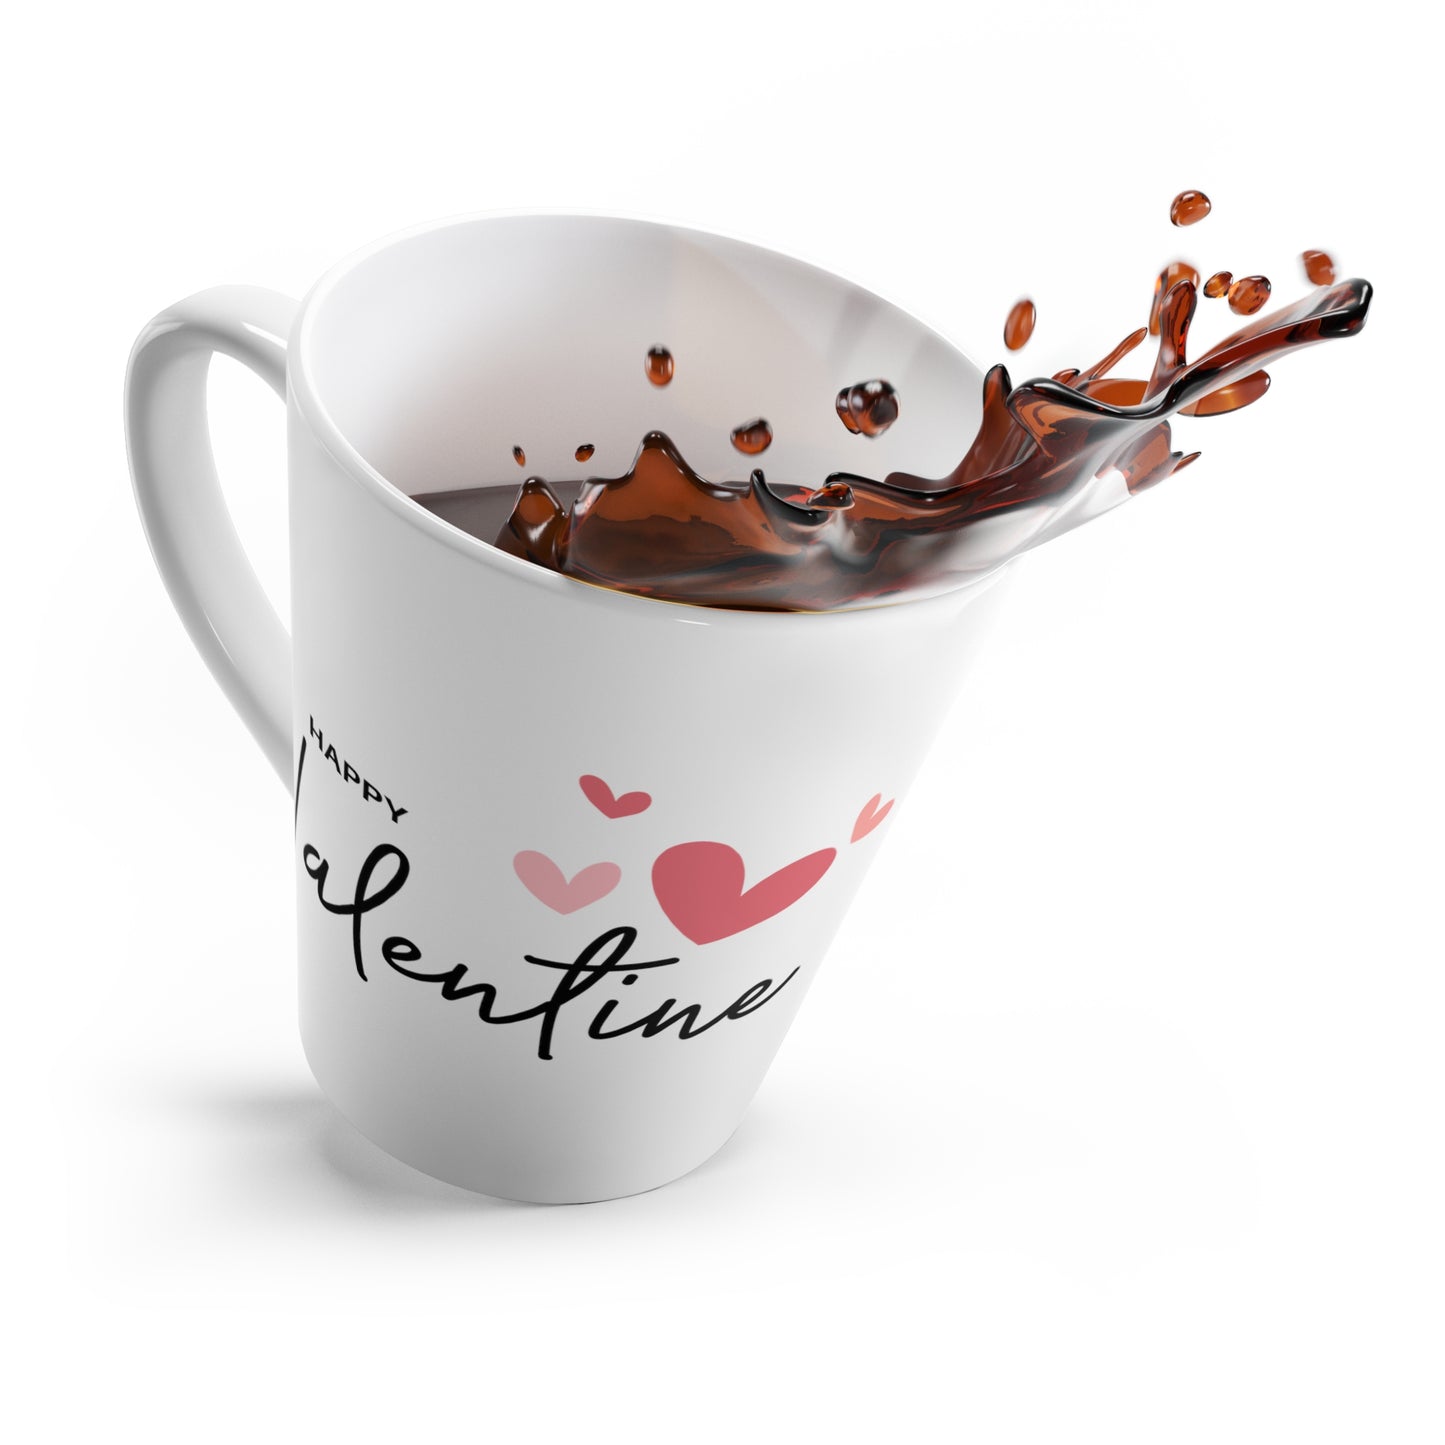 Happy Valentine's Day Printed Latte Coffee Mug, 12oz